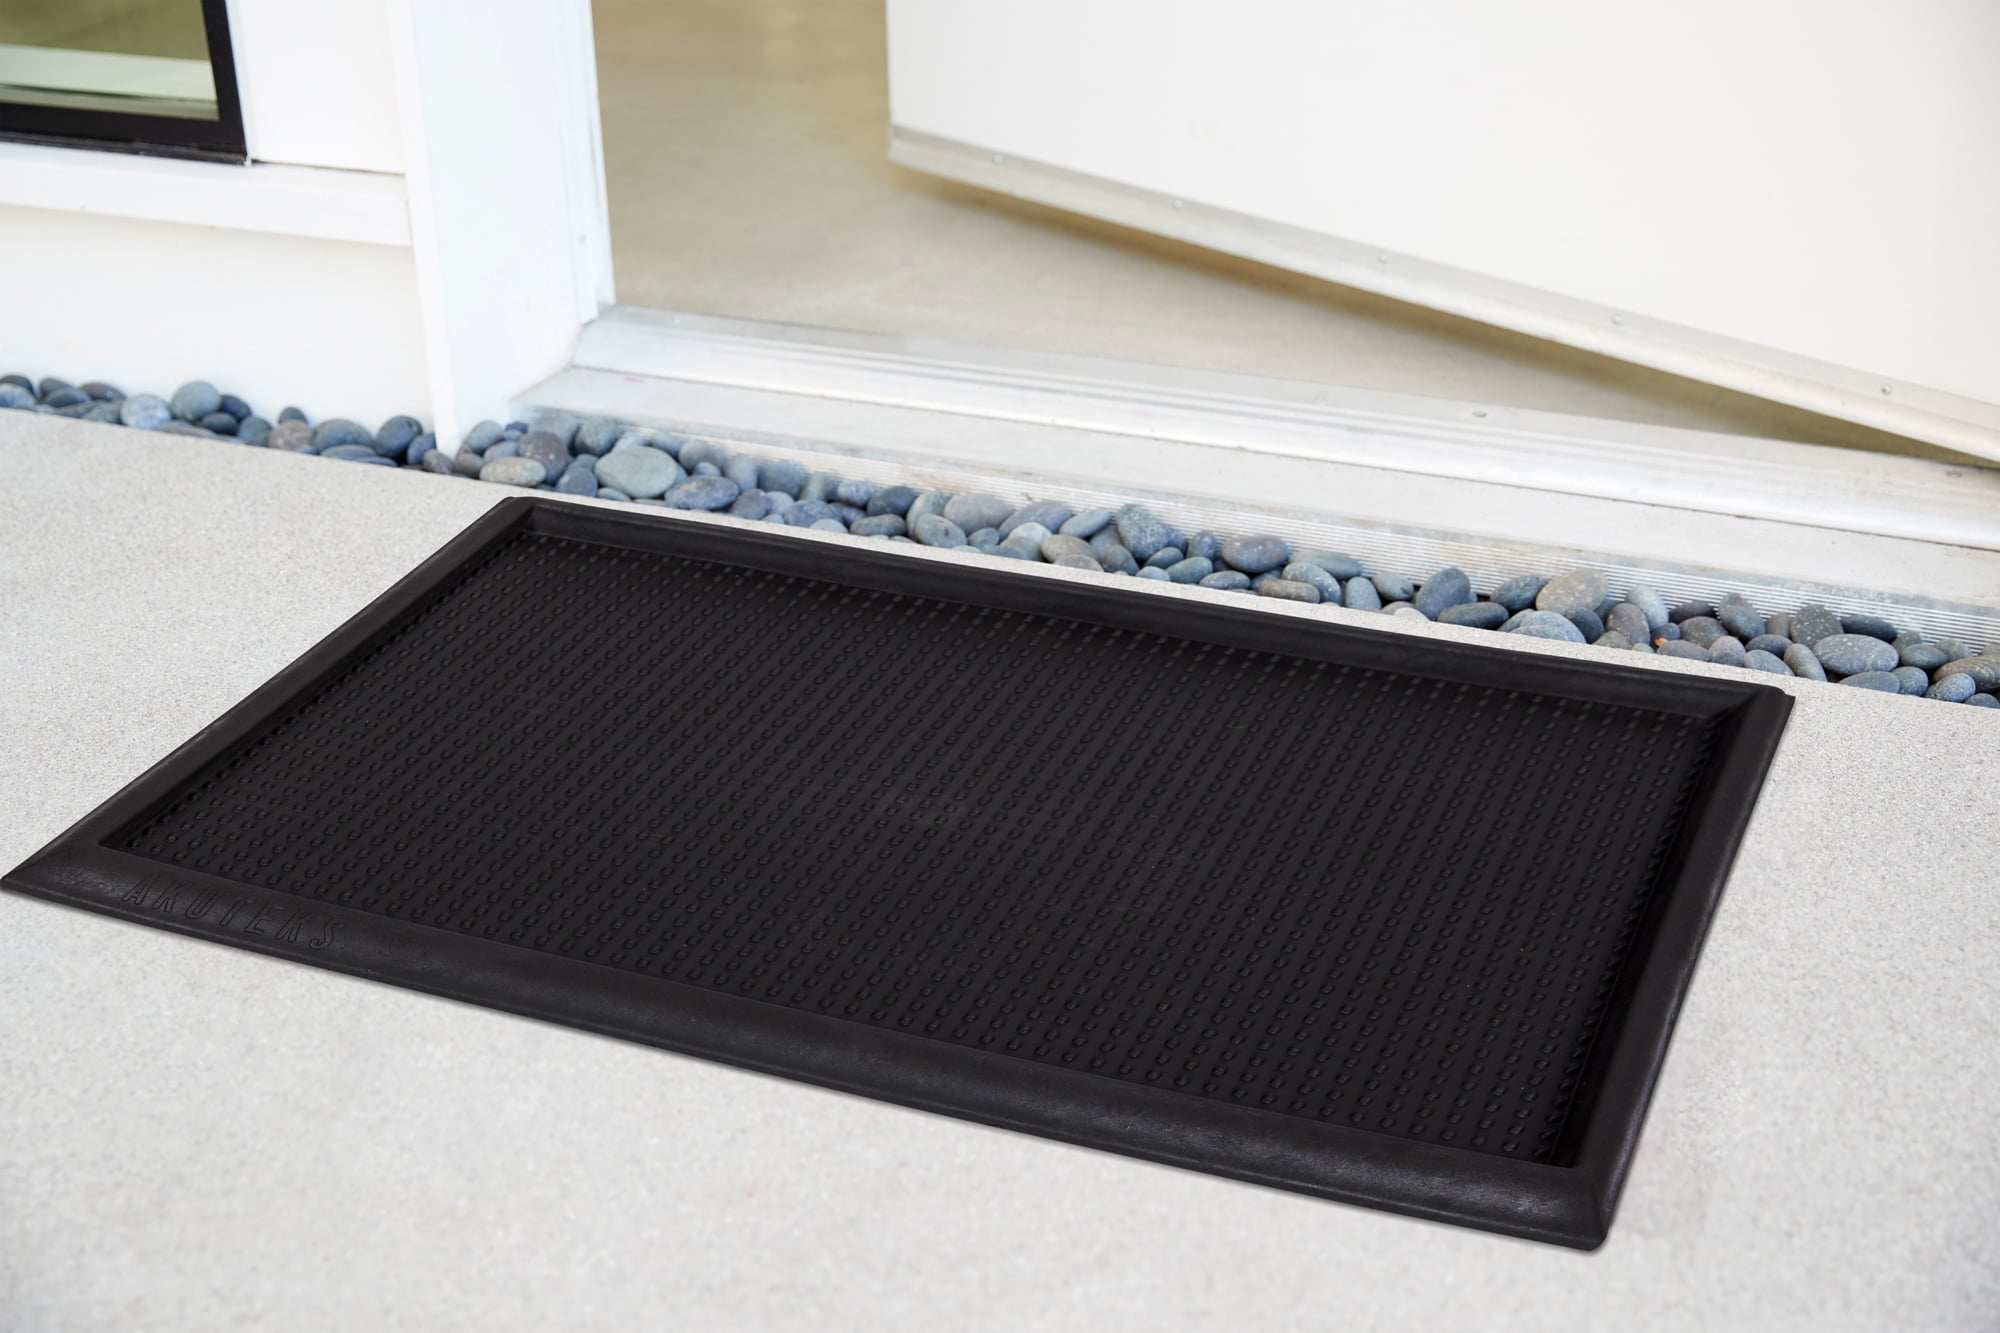 Ottomanson Multi-Purpose Indoor & Outdoor Waterproof Tray 30 x 15 Black